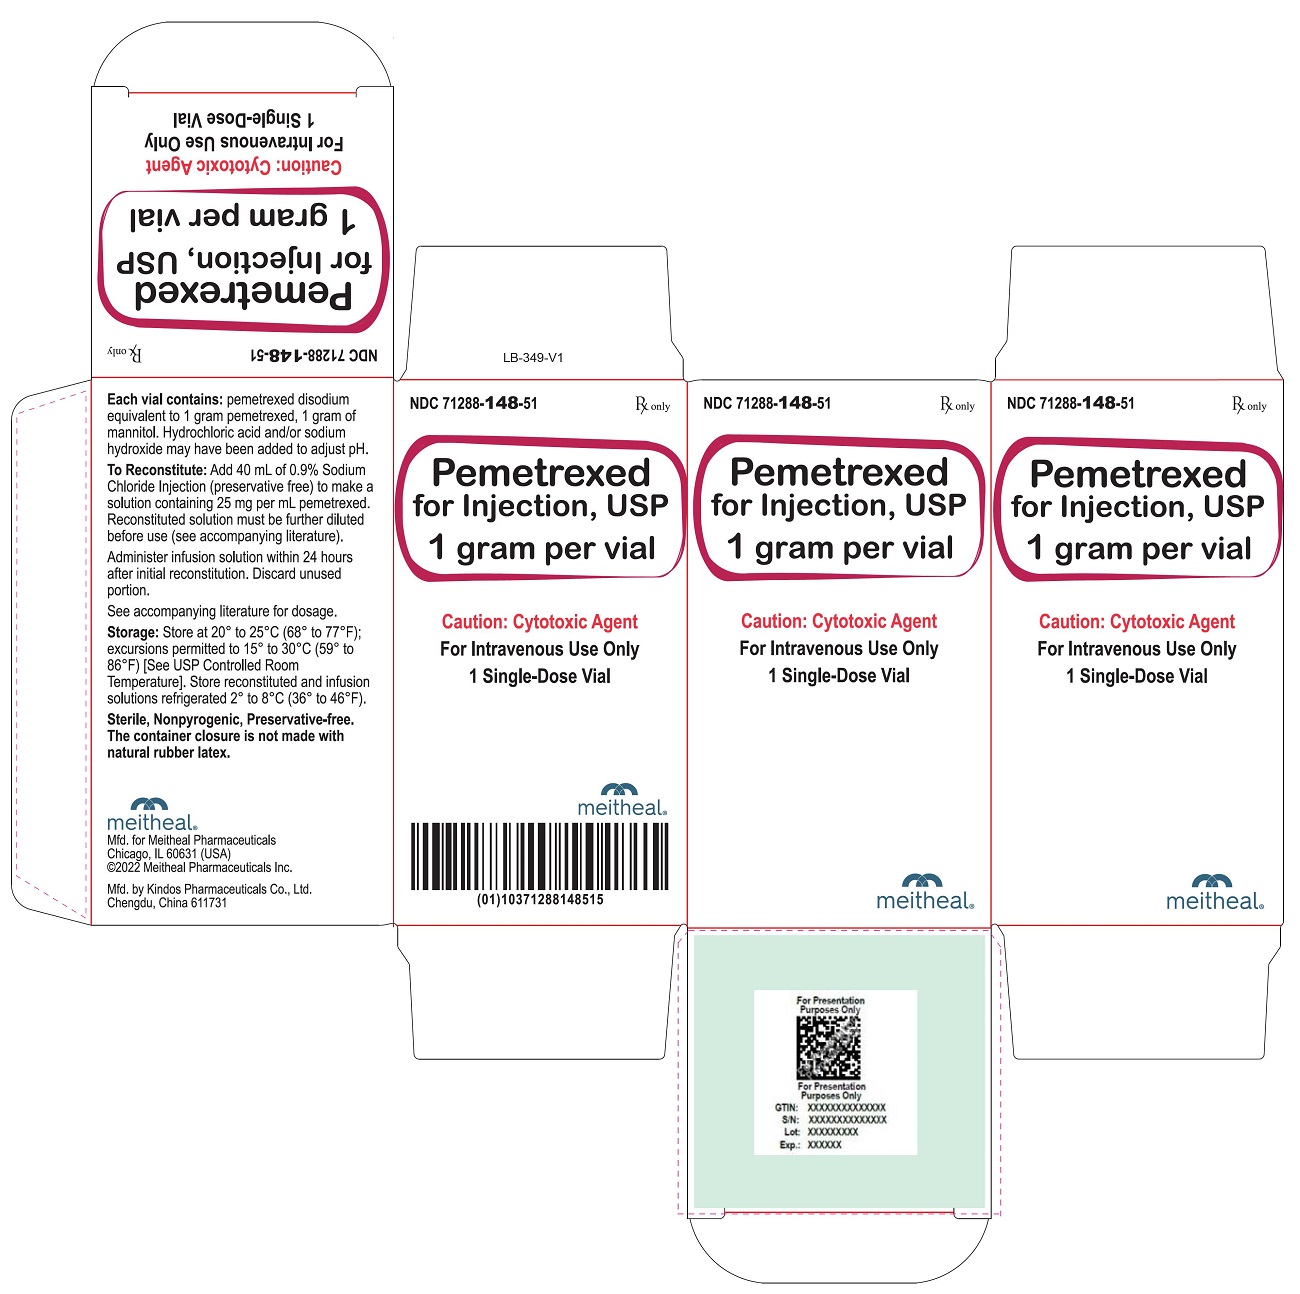 PRINCIPAL DISPLAY PANEL – Pemetrexed for Injection, USP 1 gram Carton